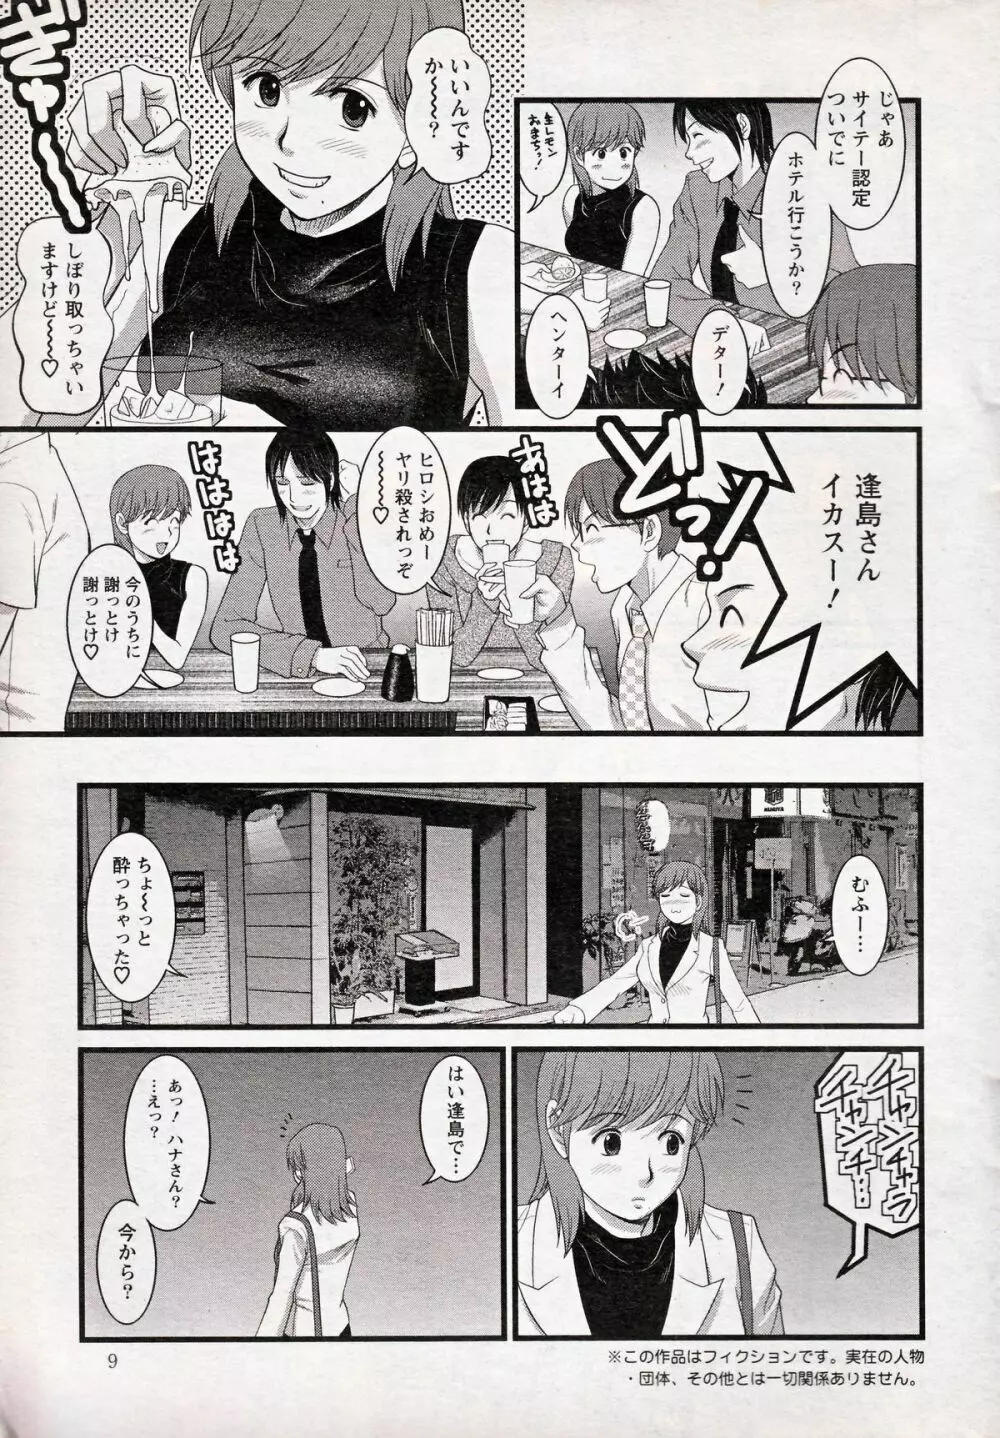 Haken no Muuko-san 13 7ページ